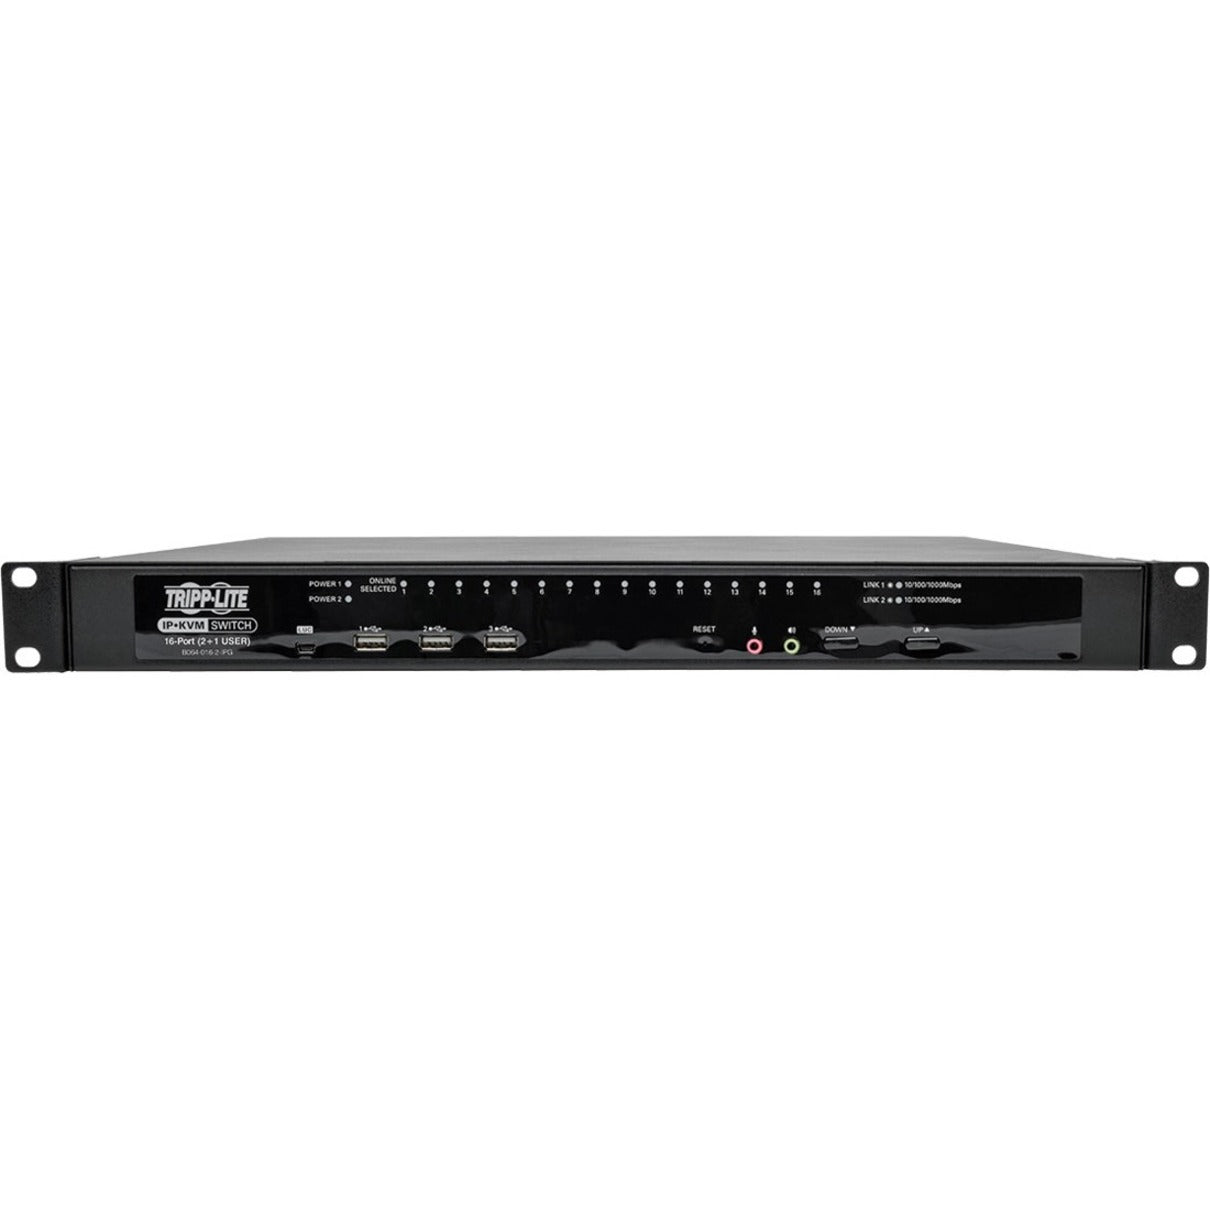 Tripp Lite B064-016-02-IPG NetDirector KVM スイッチボックス、16 ポート、USB/PS/2、ラックマウント可能 Tripp Lite - トリップライト